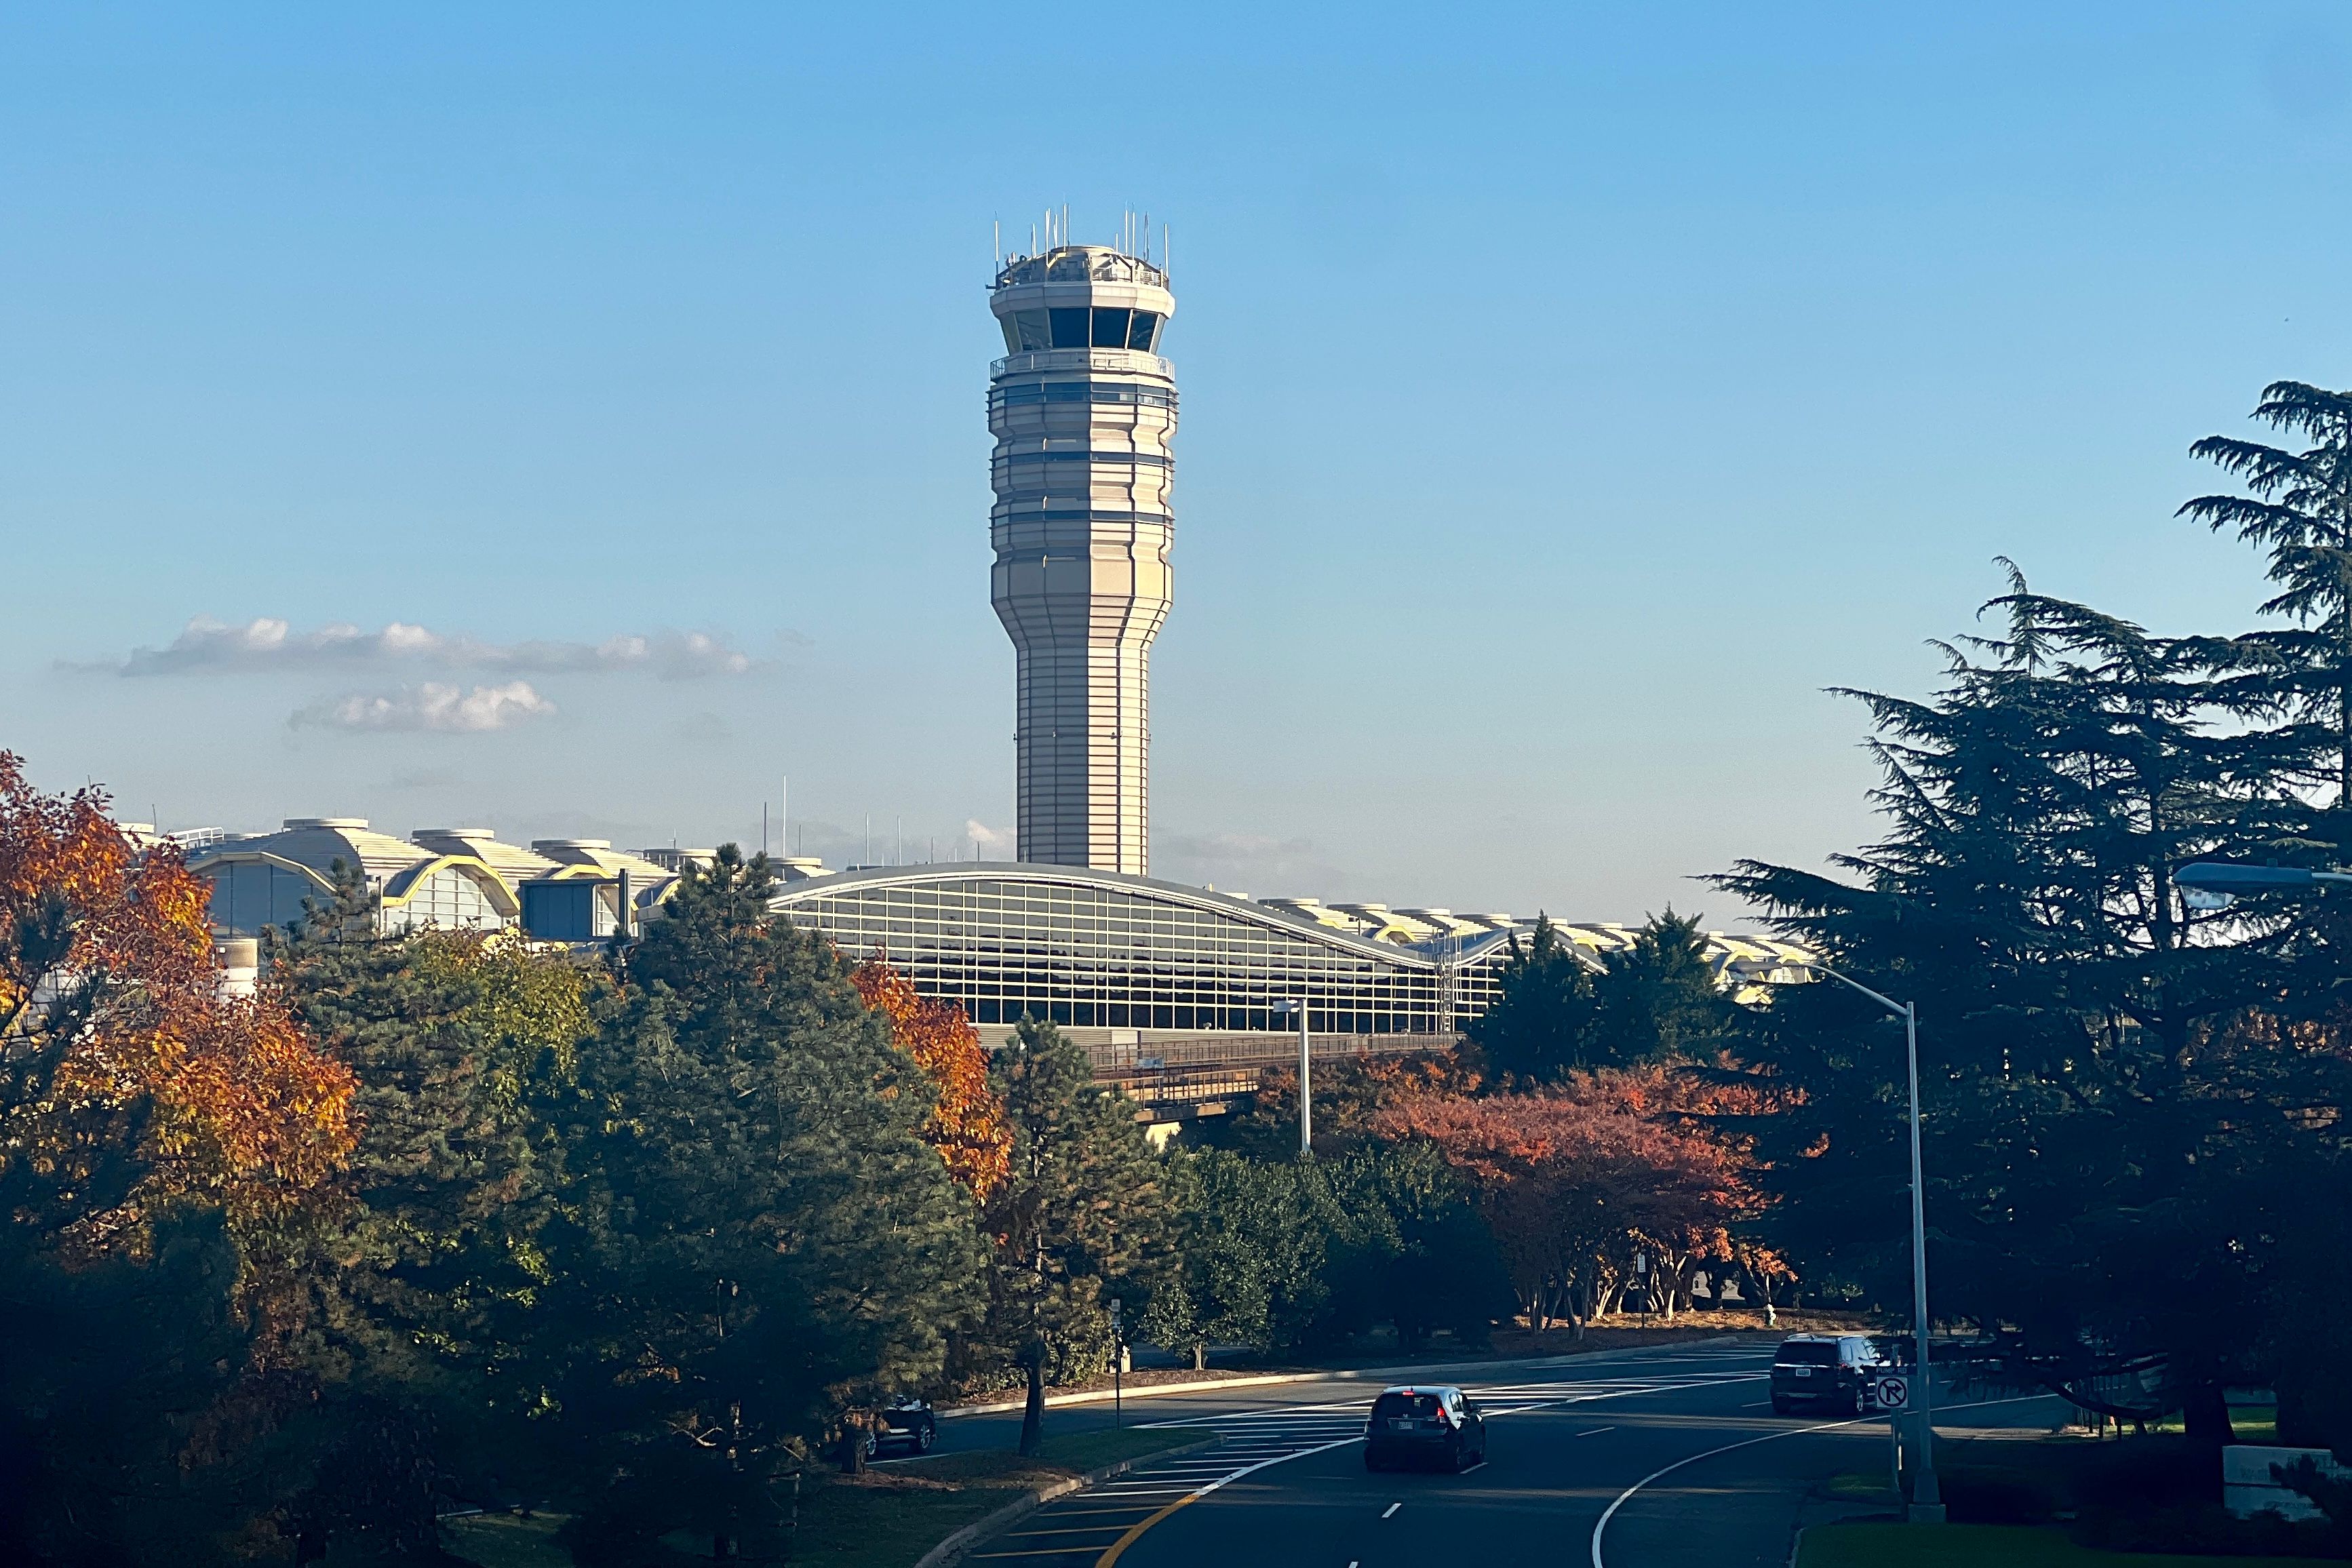 Ronald Reagan Washington National Airport (DCA) in the autumn